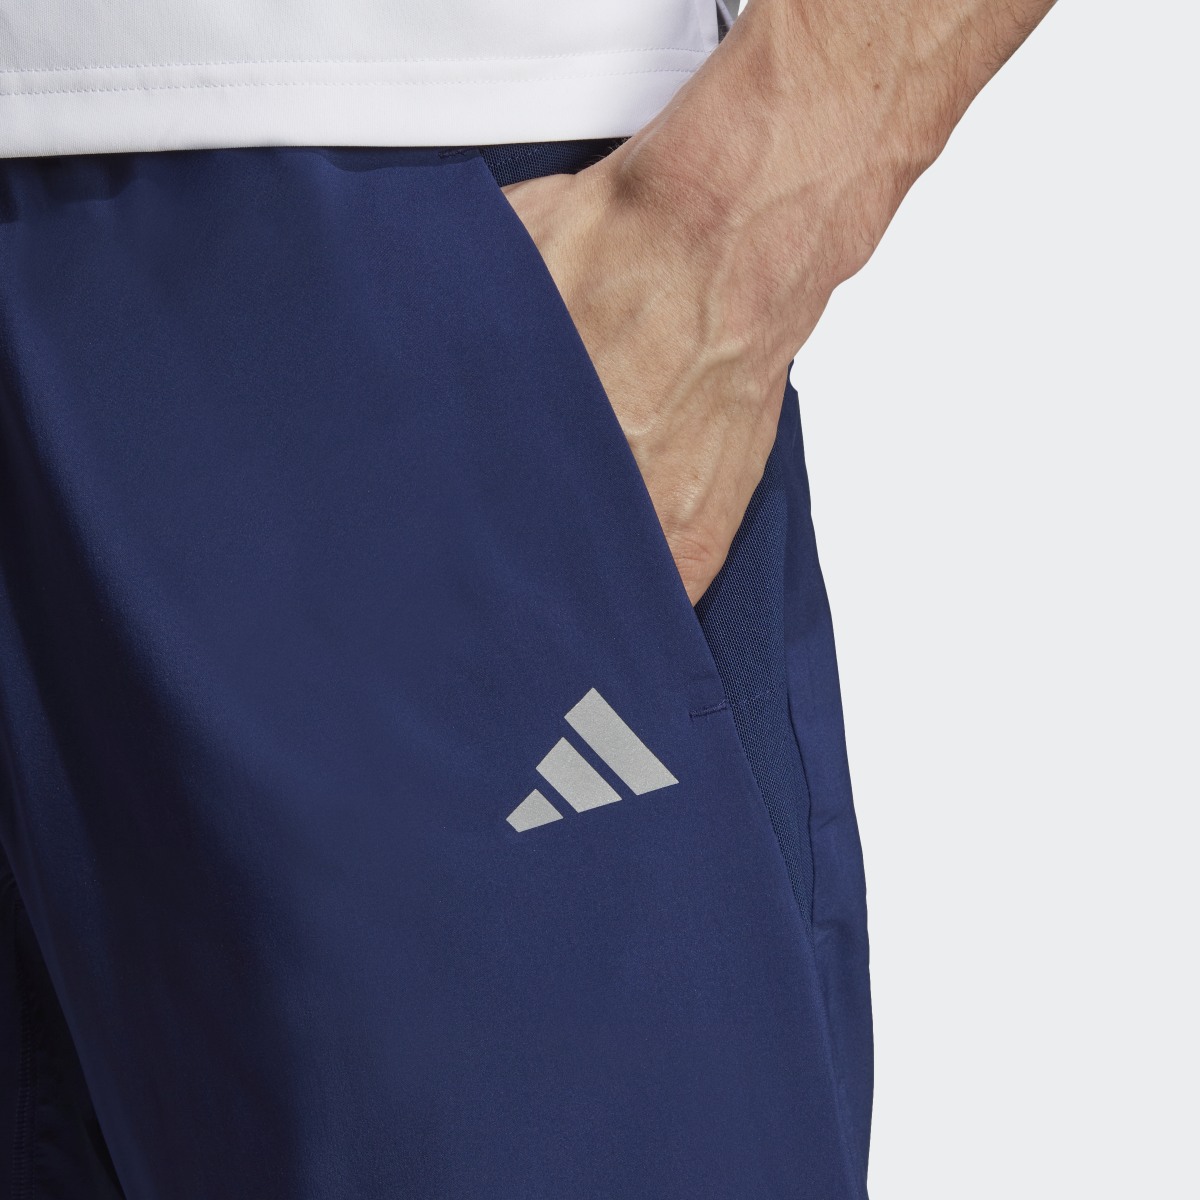 Adidas Pants Own the Run Woven Astro. 5